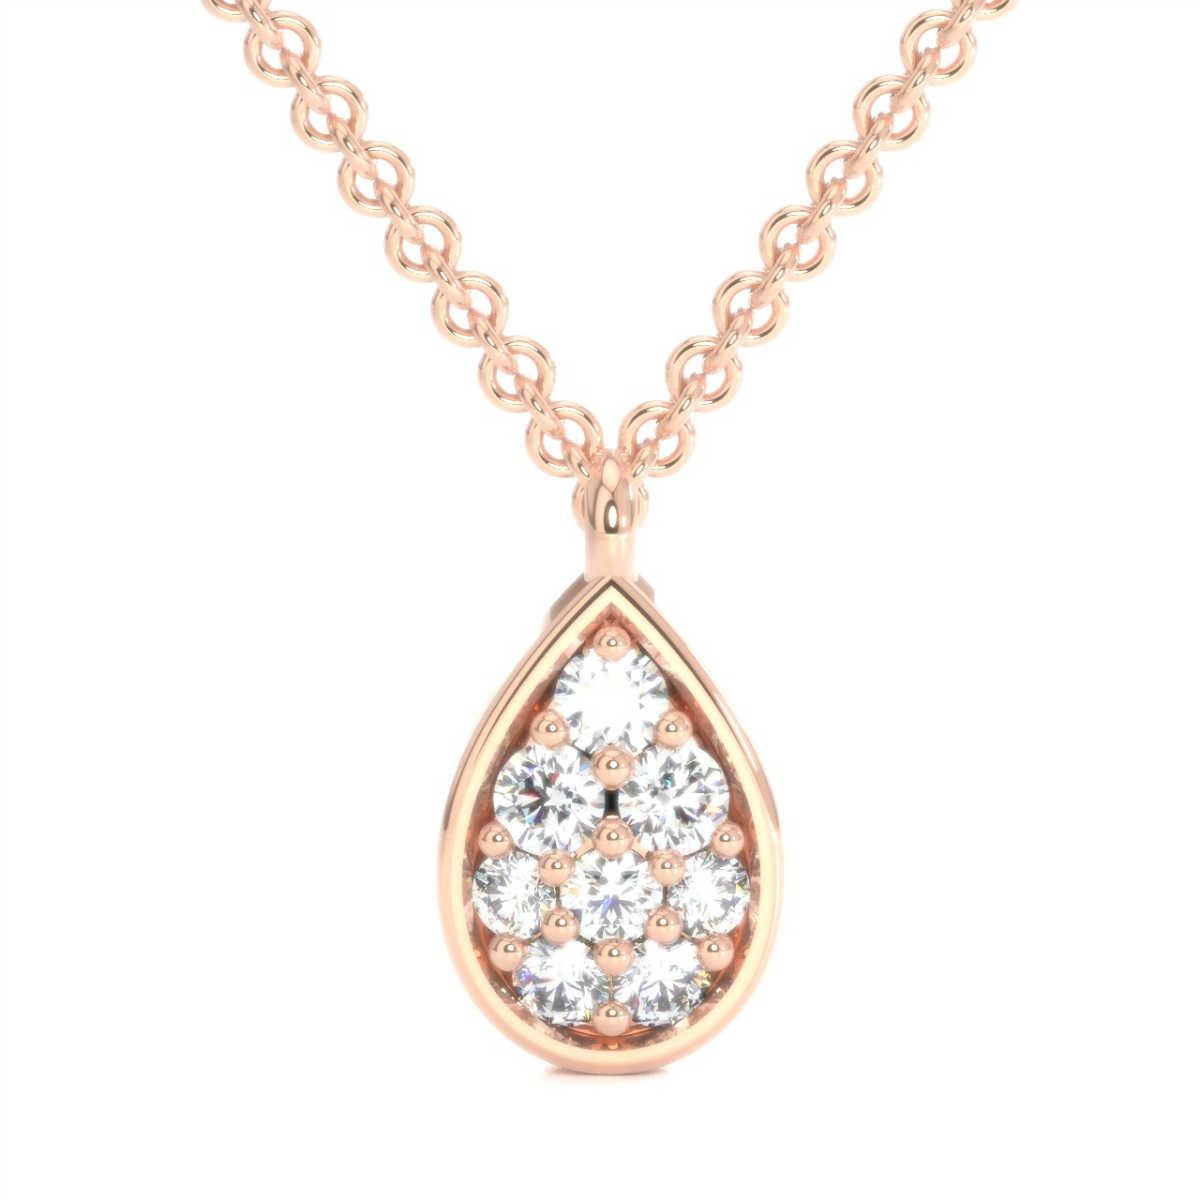 5 carat pear shaped diamond